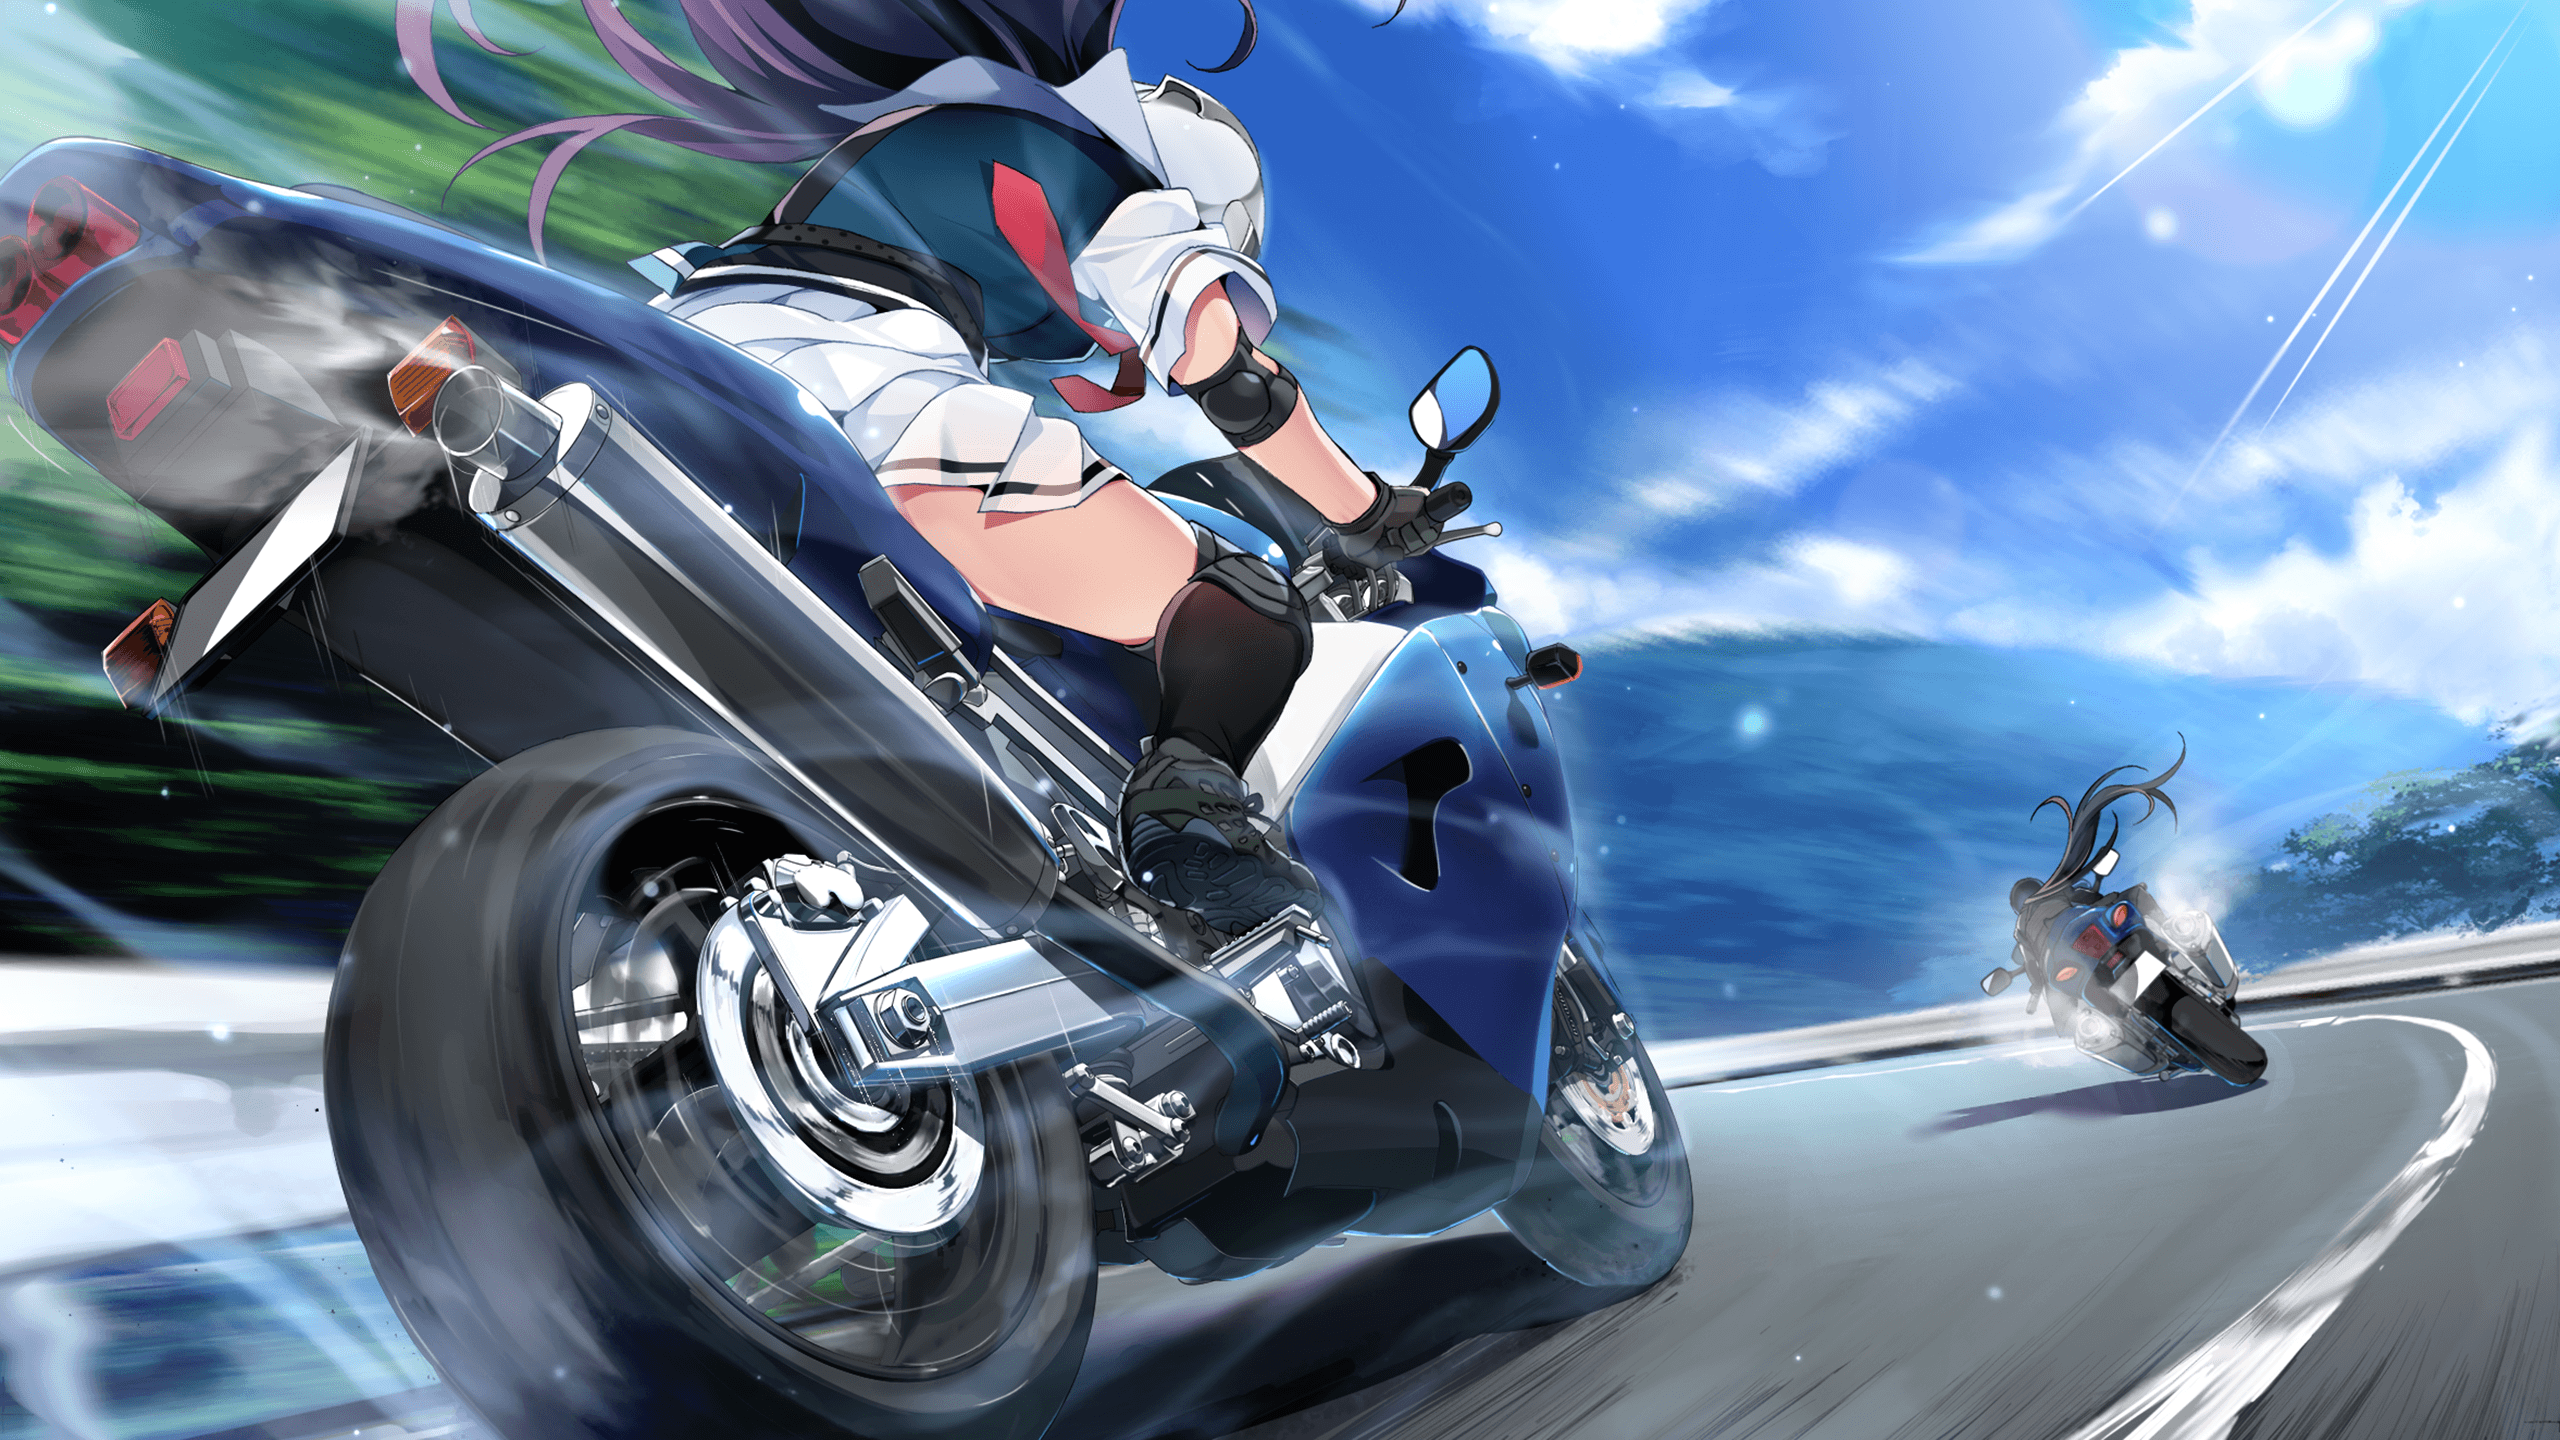  Motorrad Hintergrundbild 2560x1440. Anime Motorcycle Wallpaper